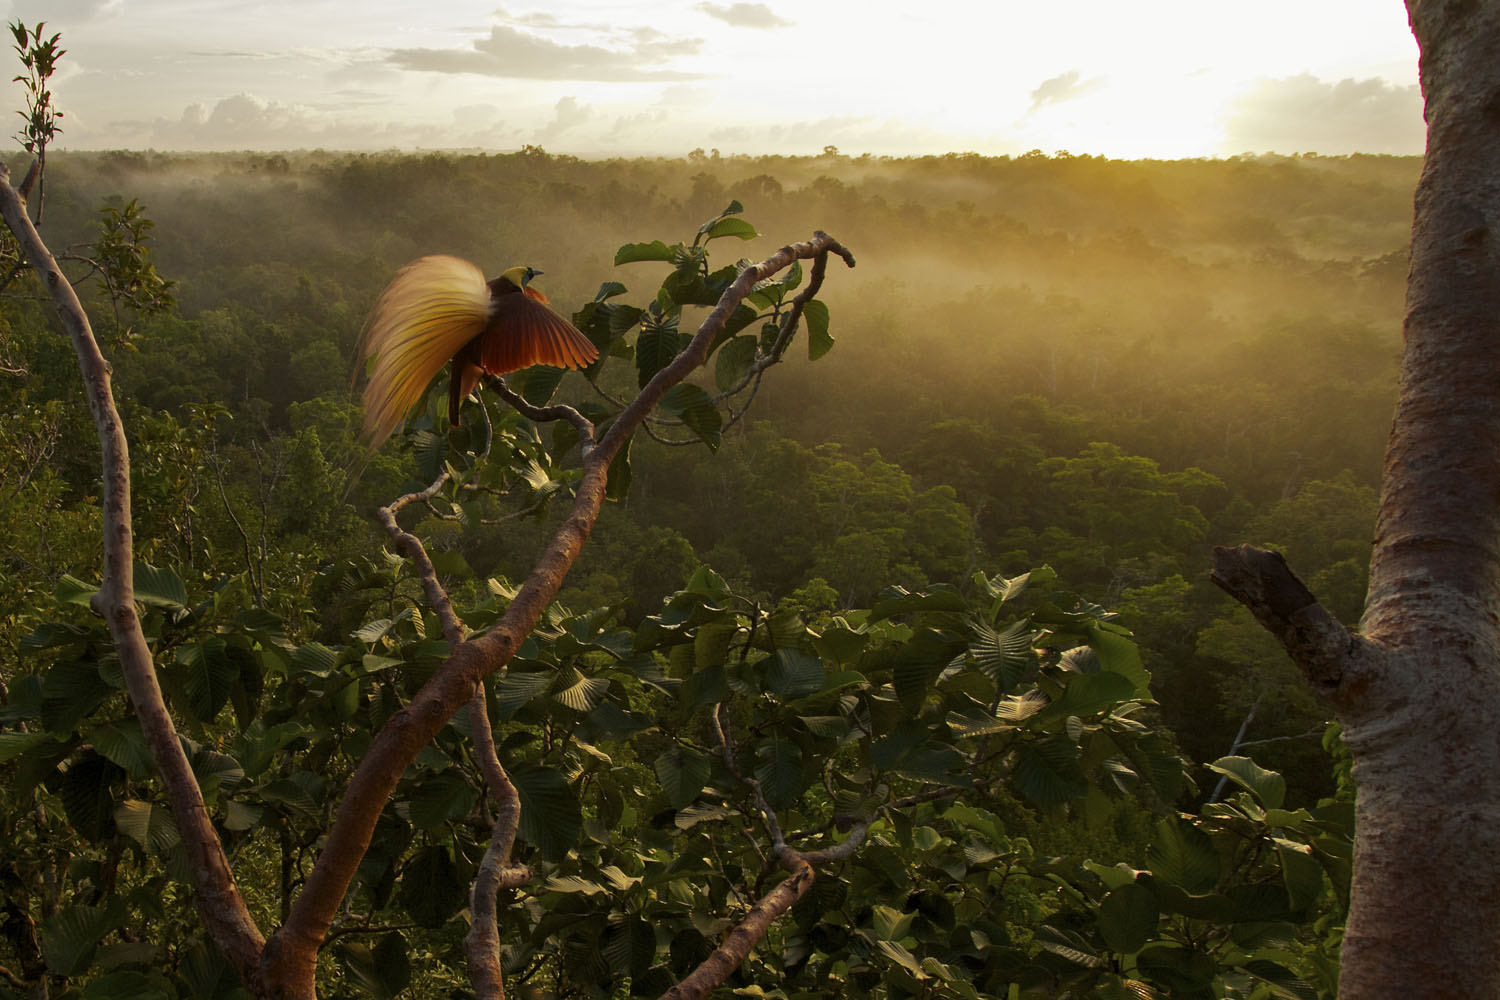 ¬© Tim Laman. Greater Bird of Paradise (Paradisaea apoda). Badigaki Forest, Wokam Island in the Aru Islands, Indonesia.